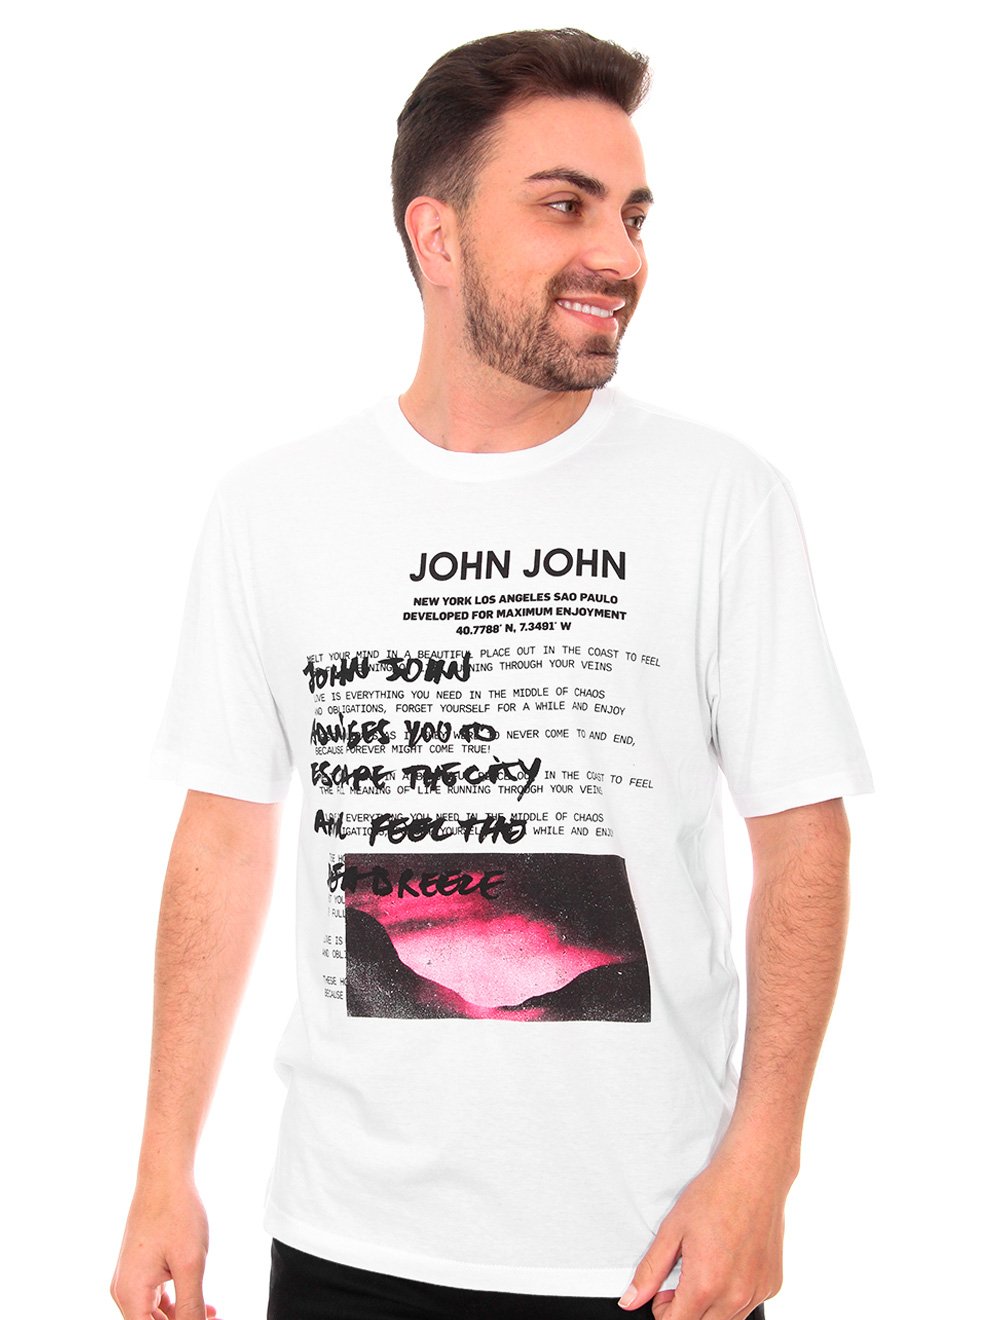 Camisa Masculina Metamorphosis - John John - Preto - Oqvestir